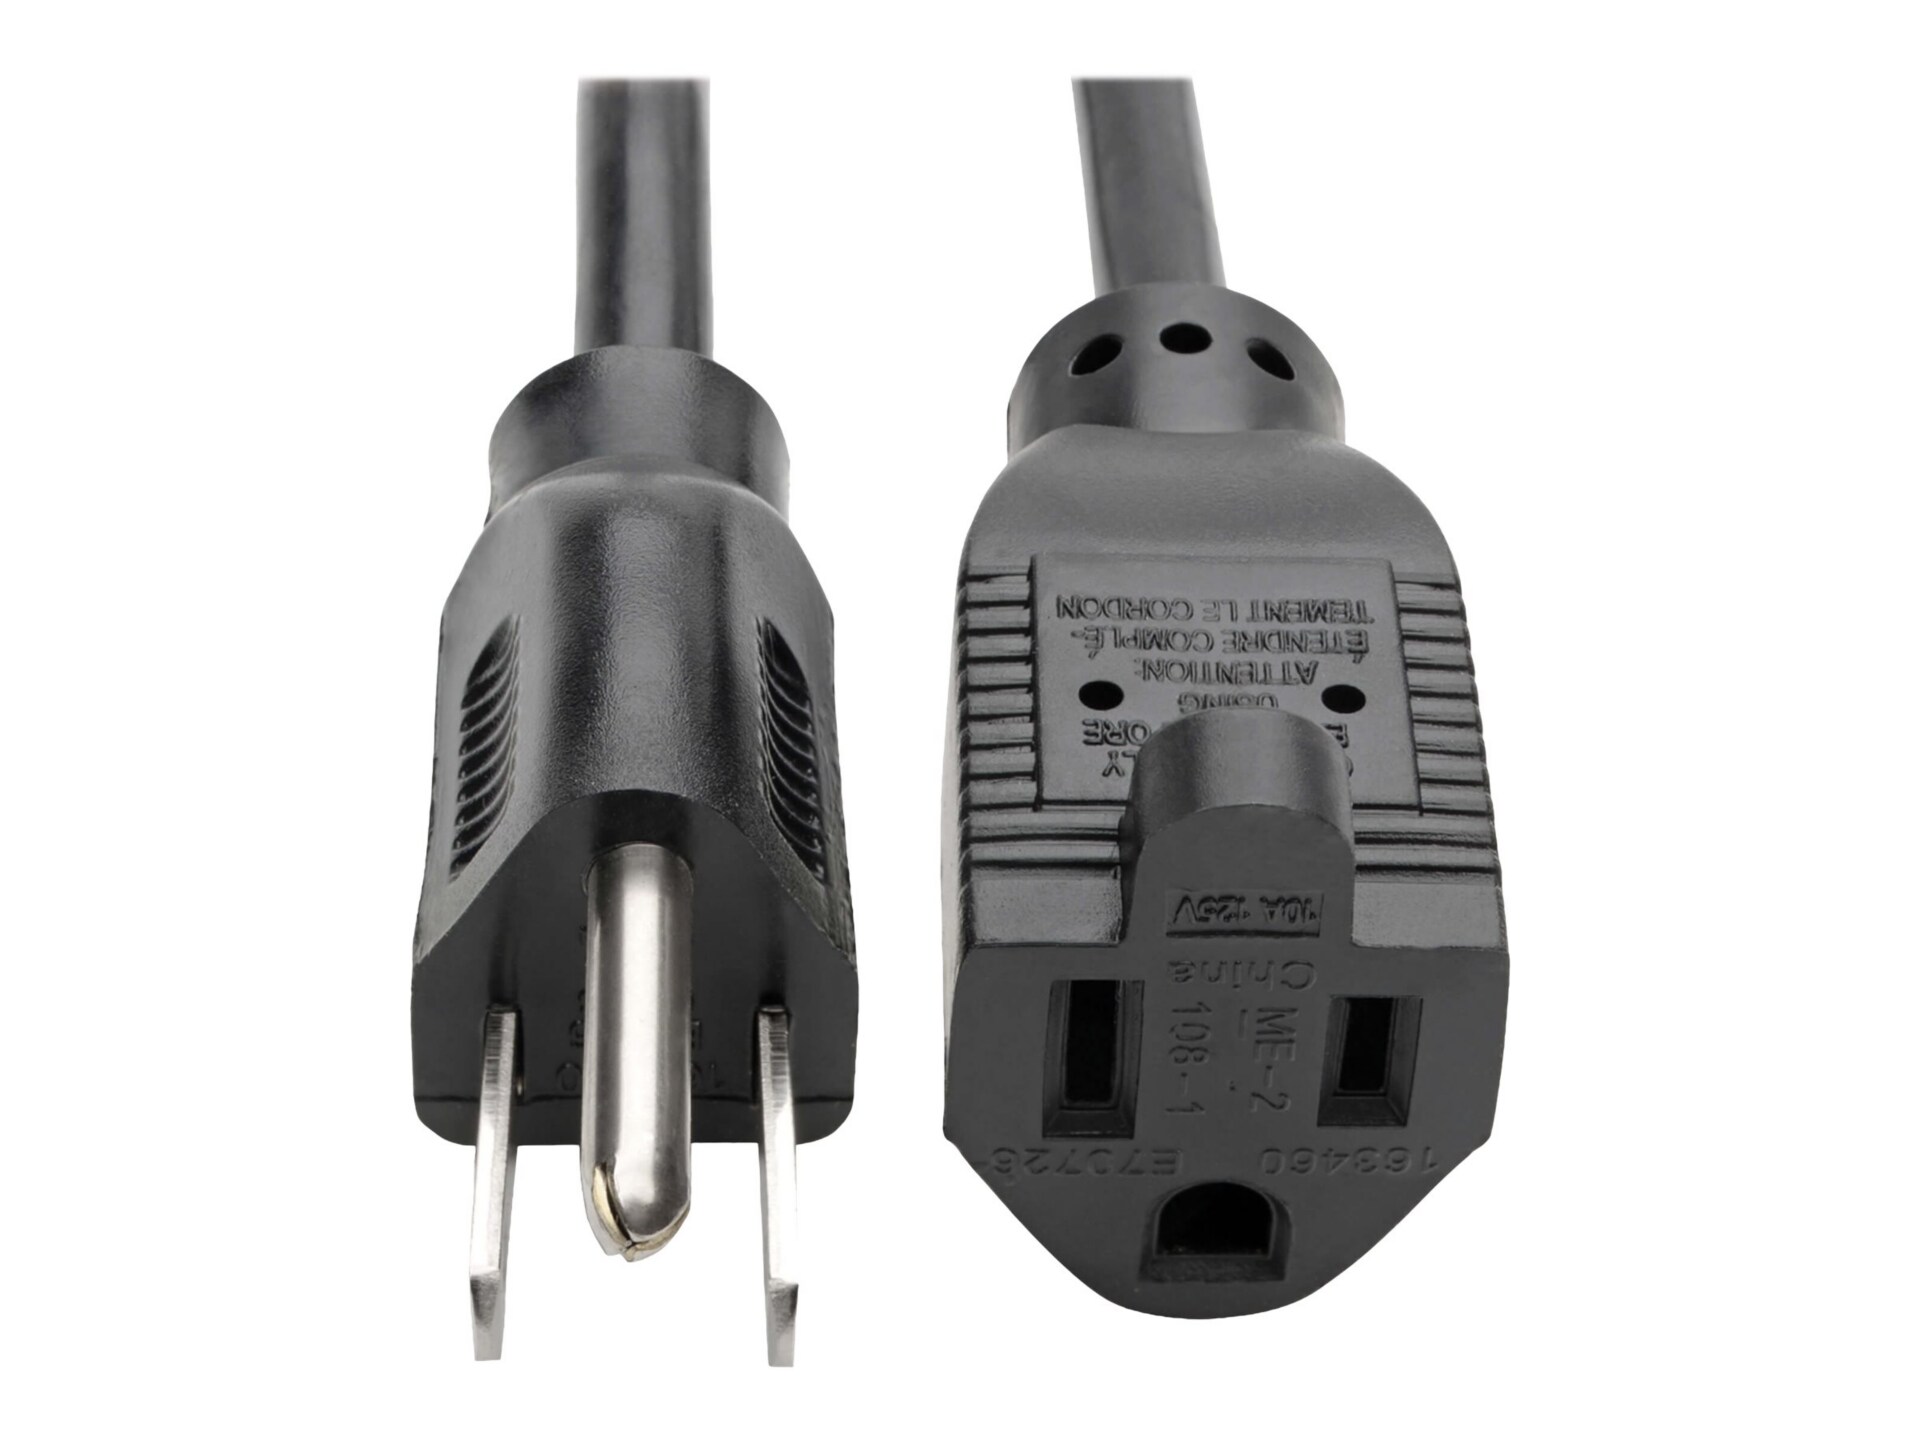 Eaton Tripp Lite Series Power Extension Cord, NEMA 5-15P to NEMA 5-15R - 10A, 120V, 18 AWG, 25 ft. (7.62 m), Black -